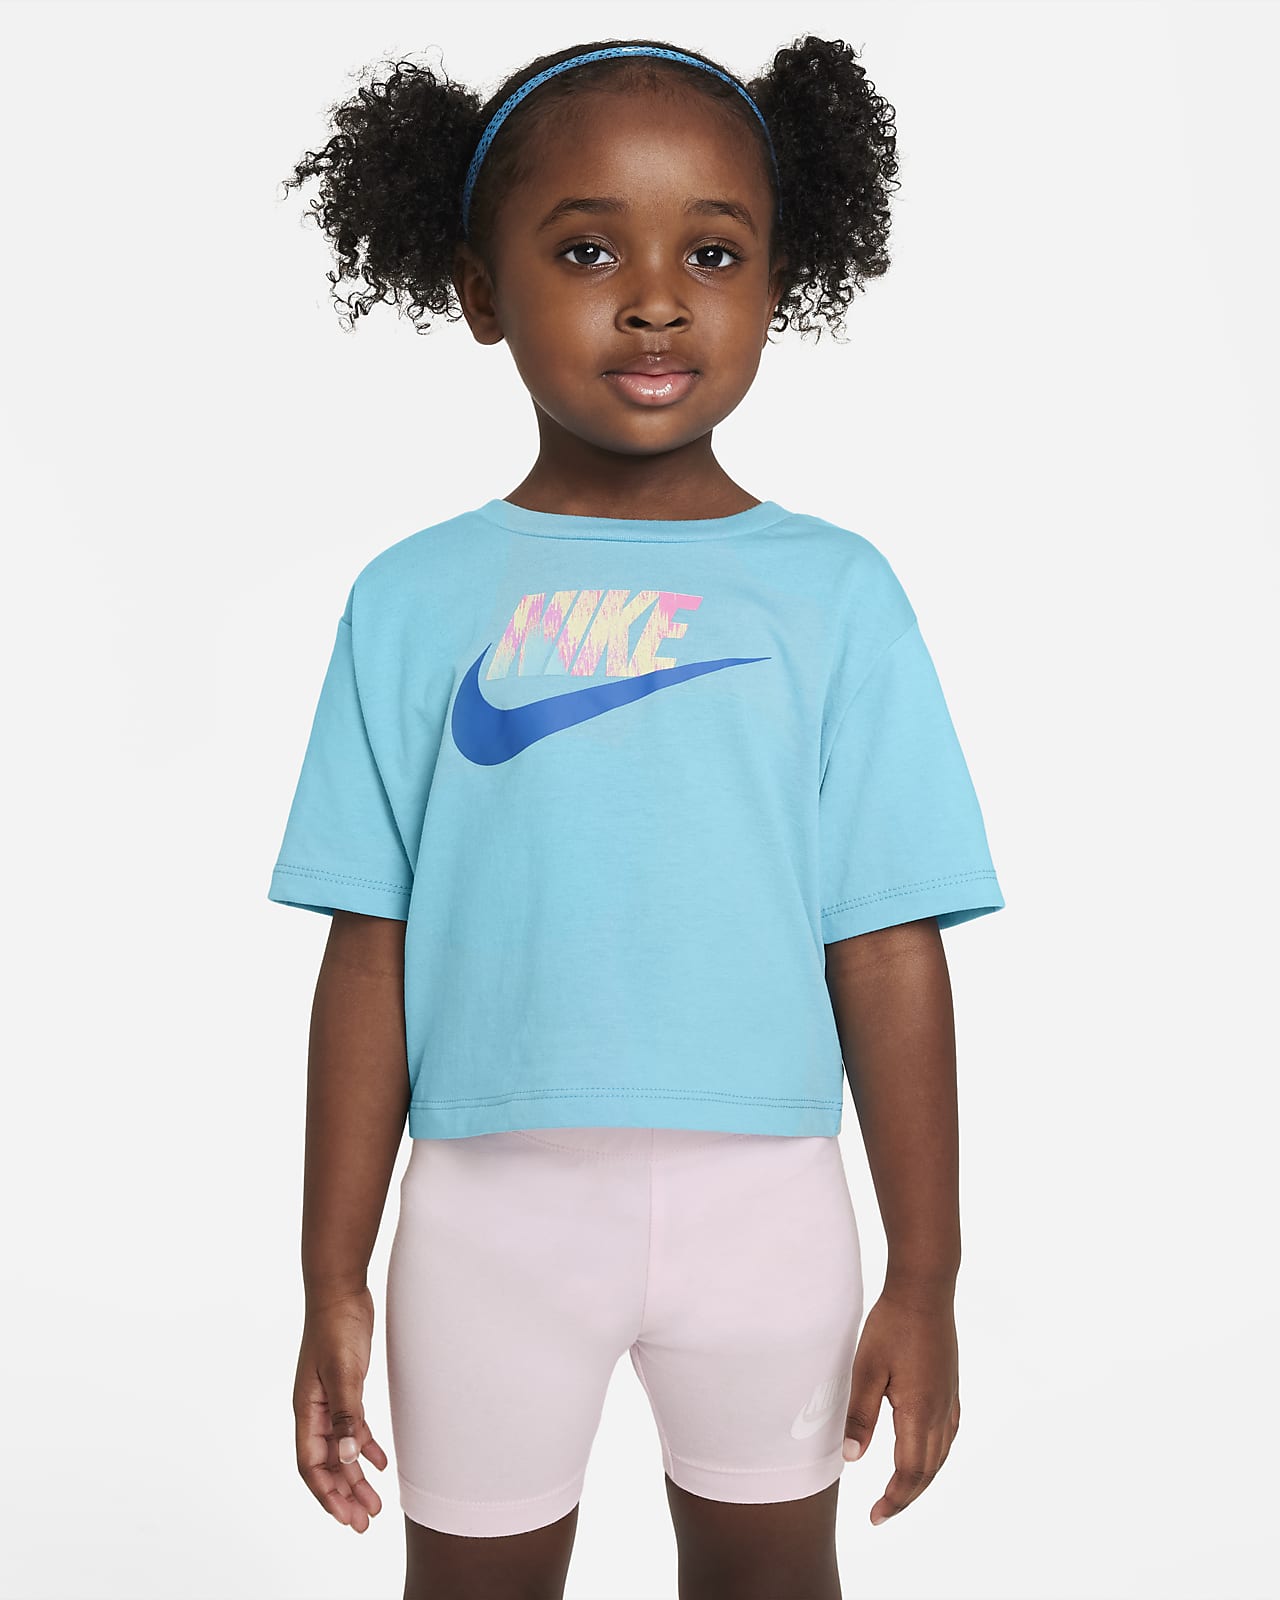 Slapper af nyheder nød Nike Printed Club Boxy Tee Toddler T-Shirt. Nike.com